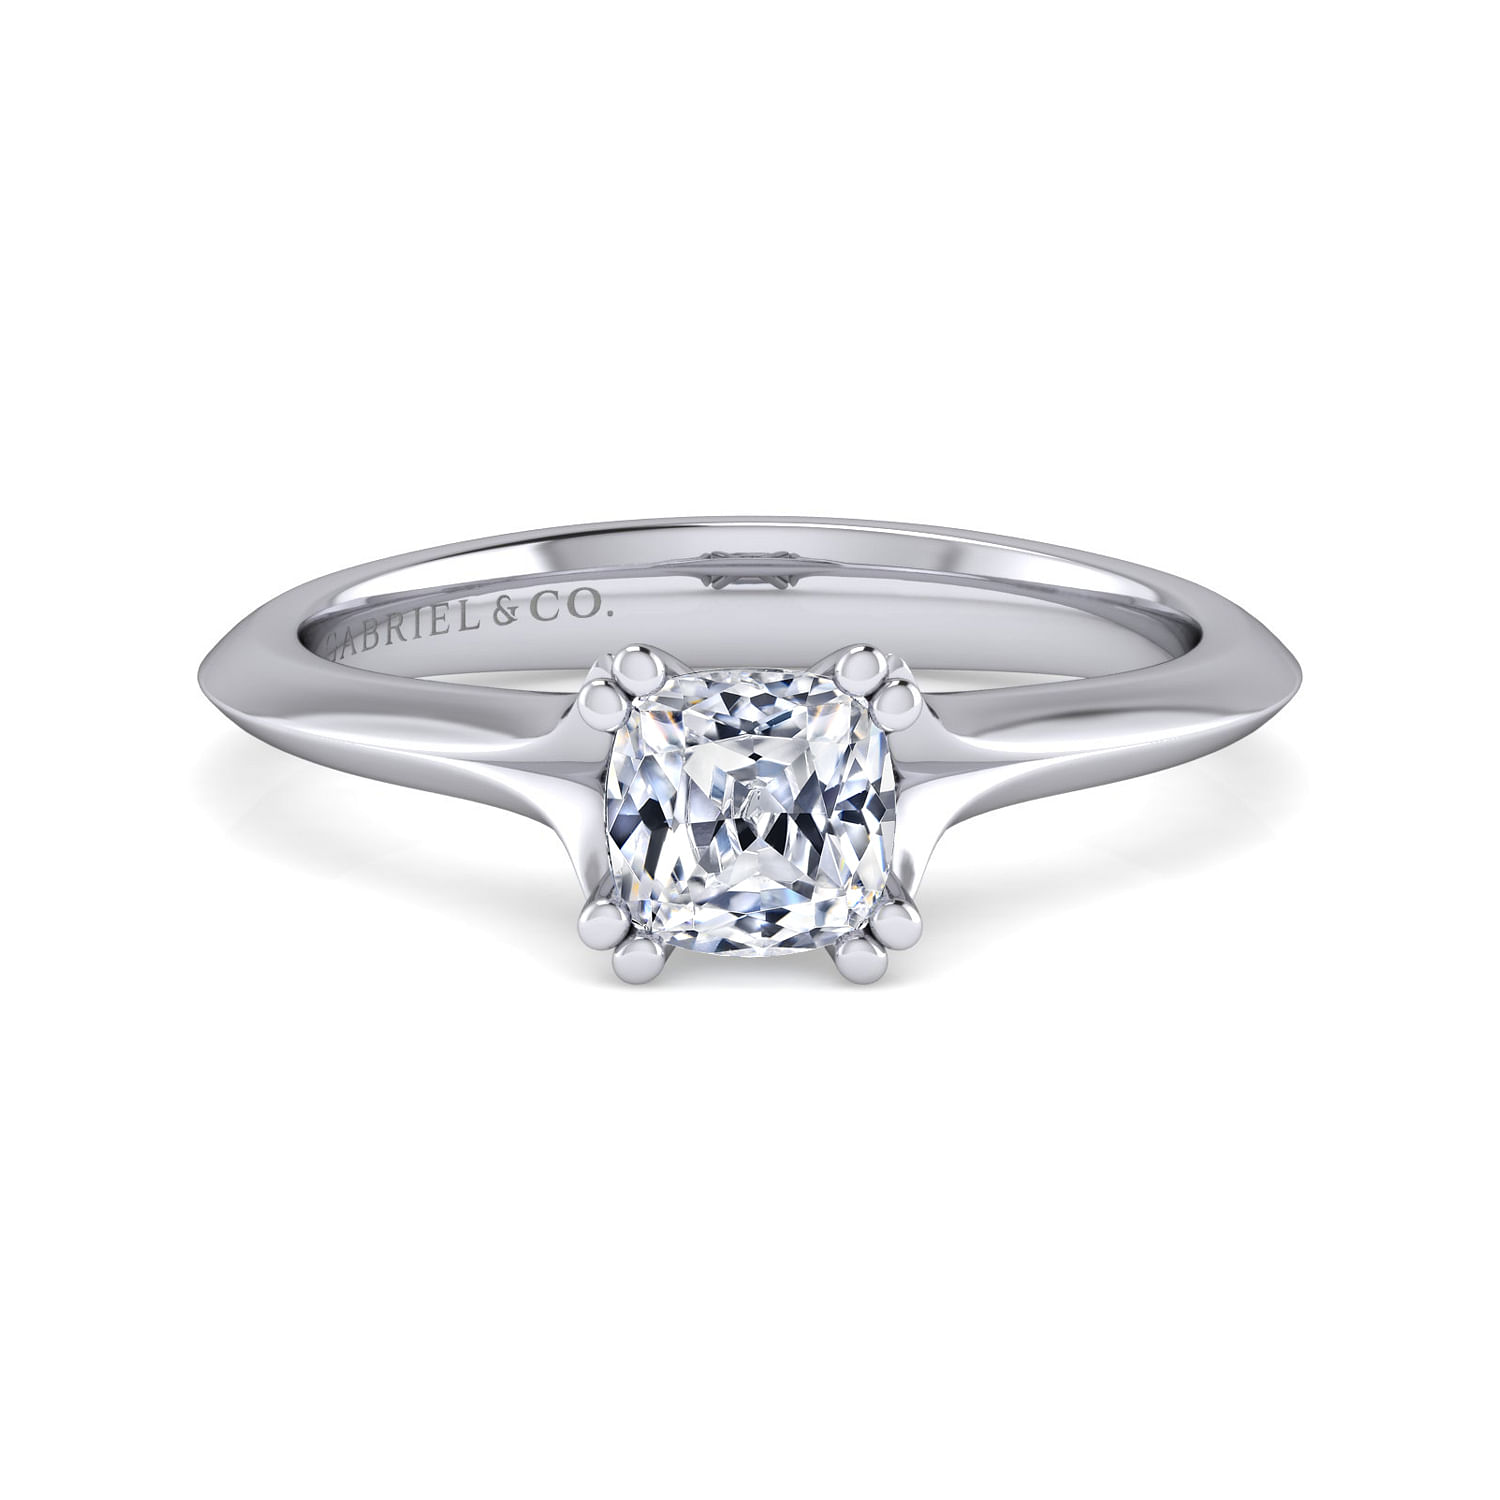 Ellis - 14K White Gold Cushion Cut Diamond Engagement Ring